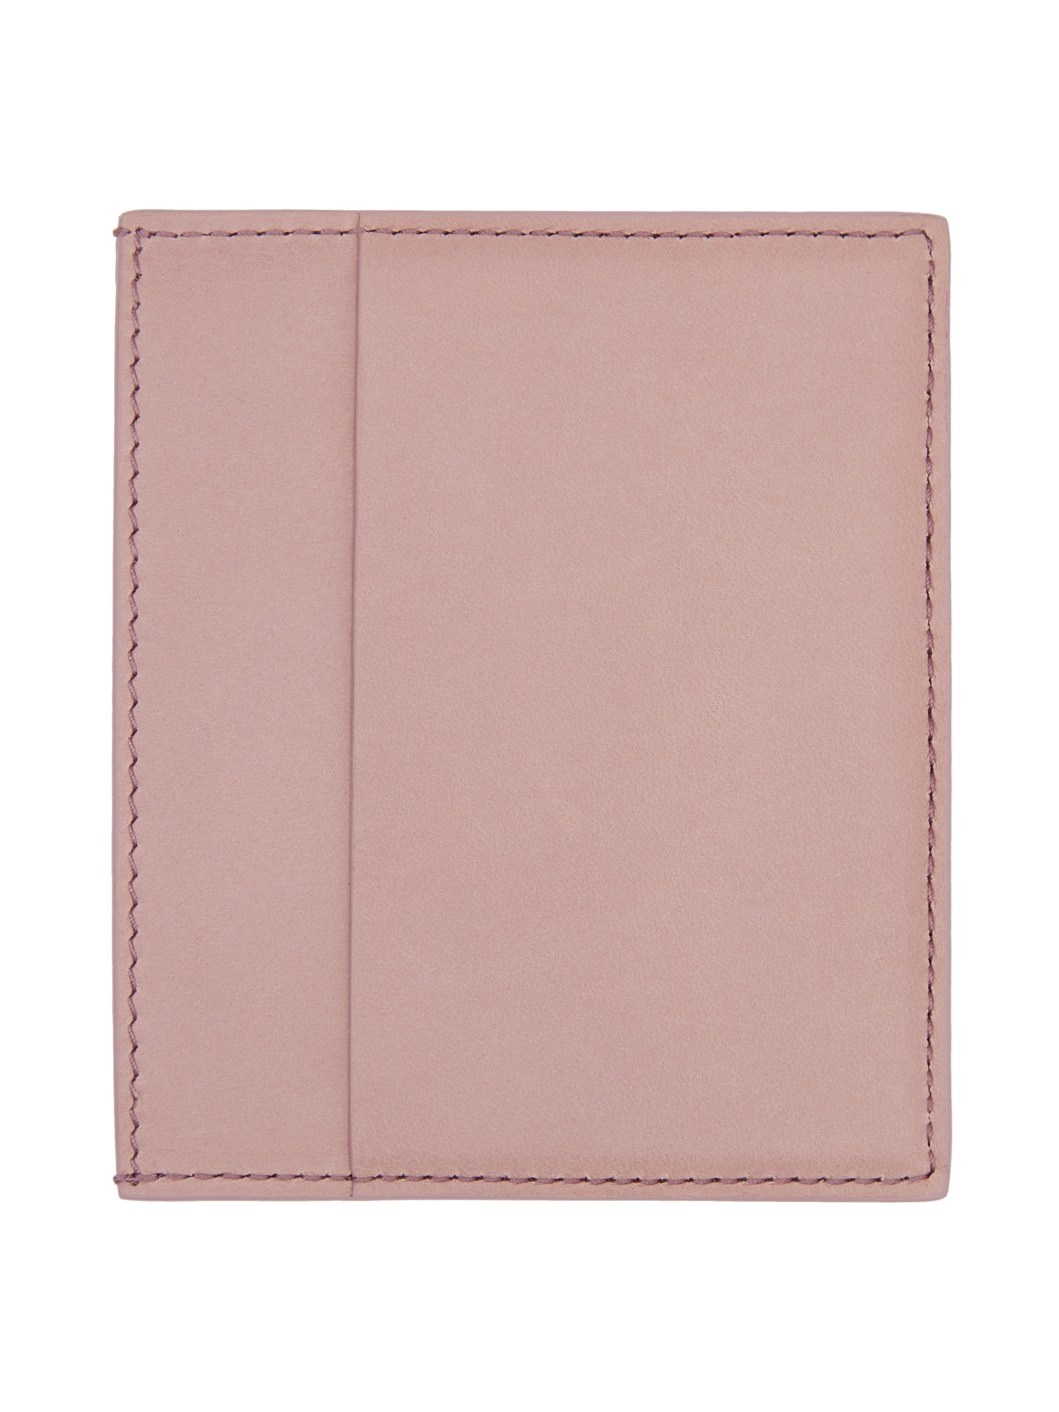 Pink Square Card Holder - 2